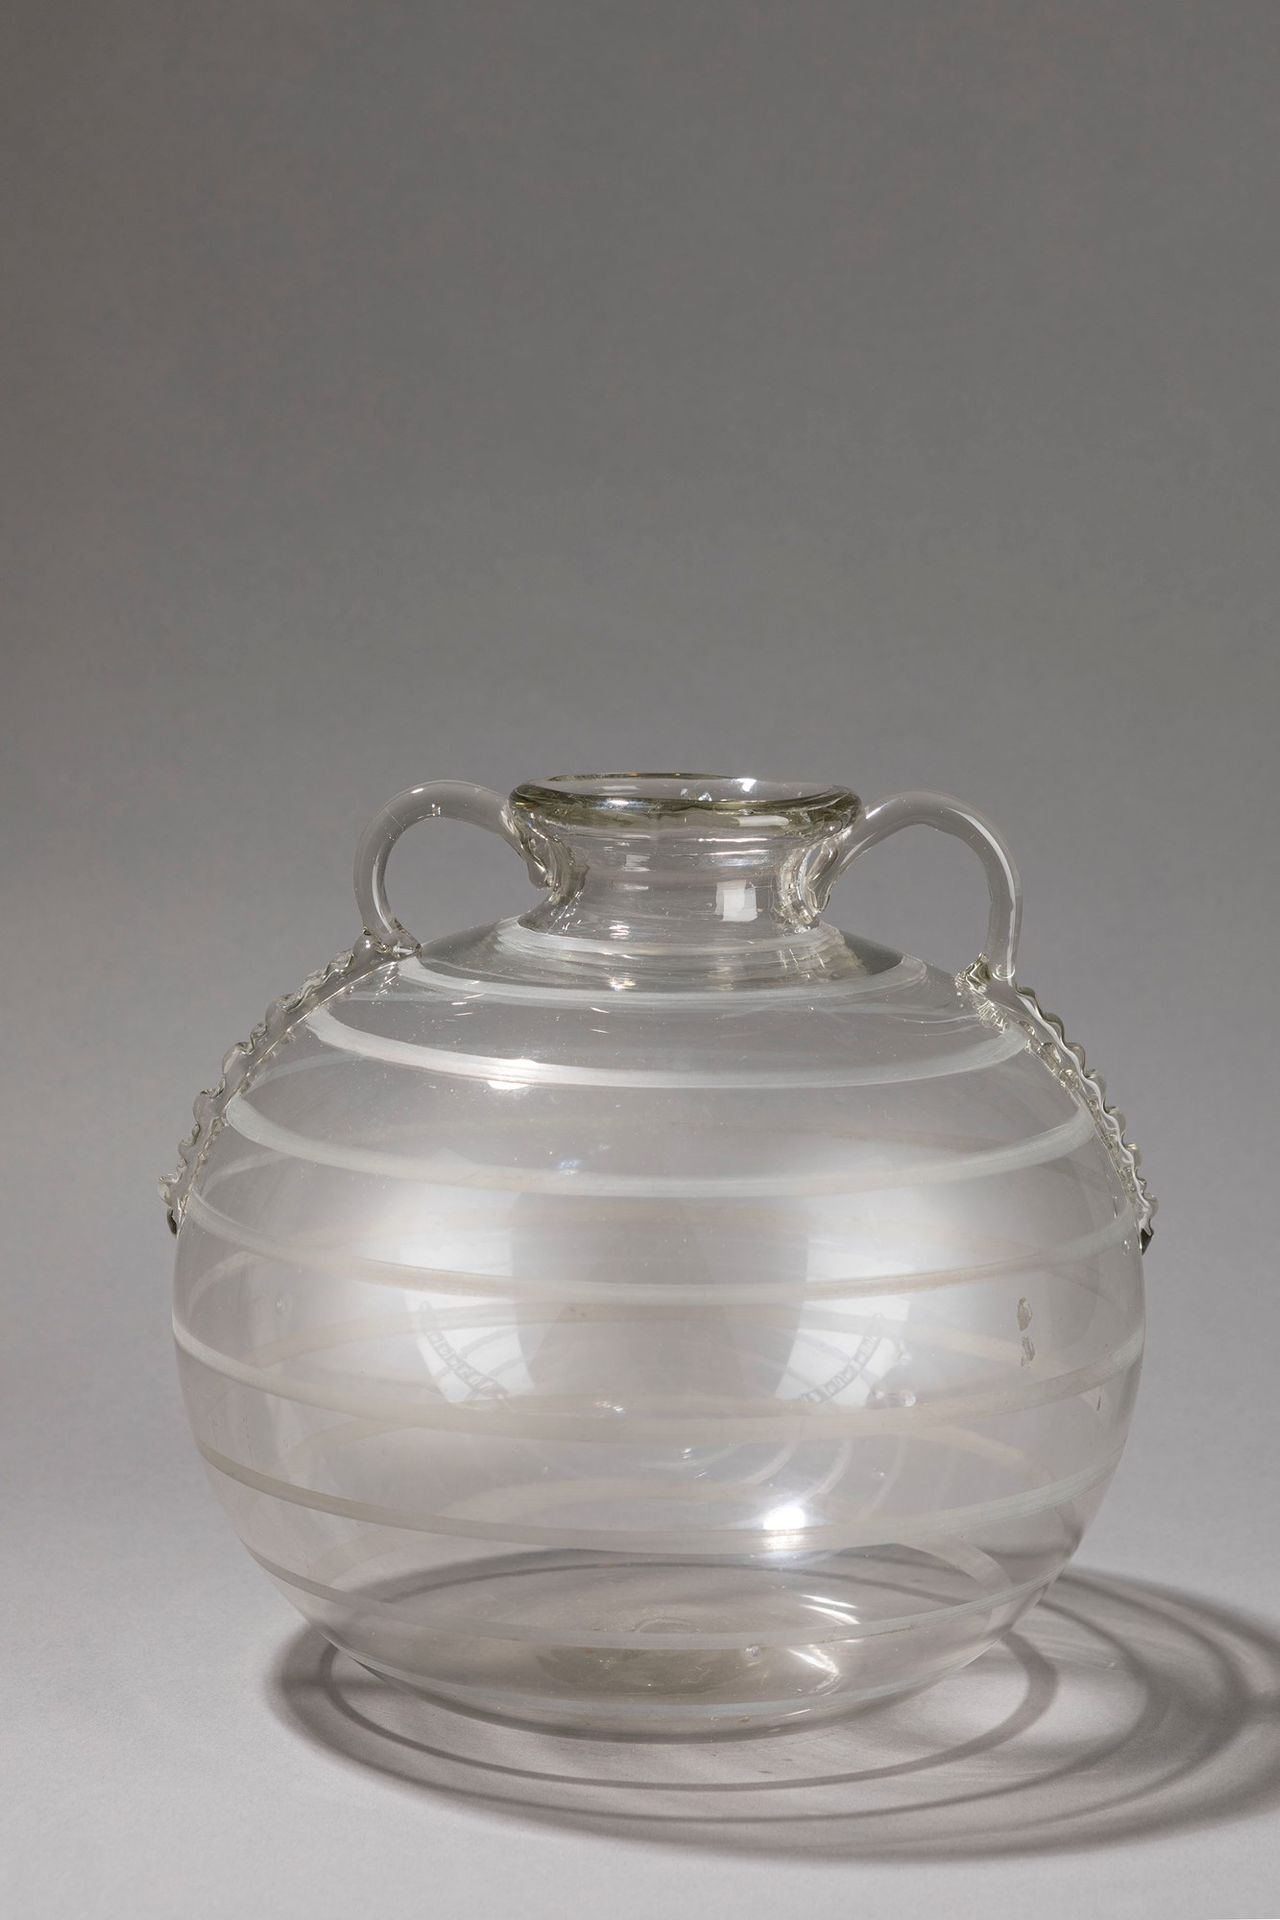 SALIR, Murano Vase, 1930 ca.

H 24 x diam 20 cm
blown glass, sathinized bands